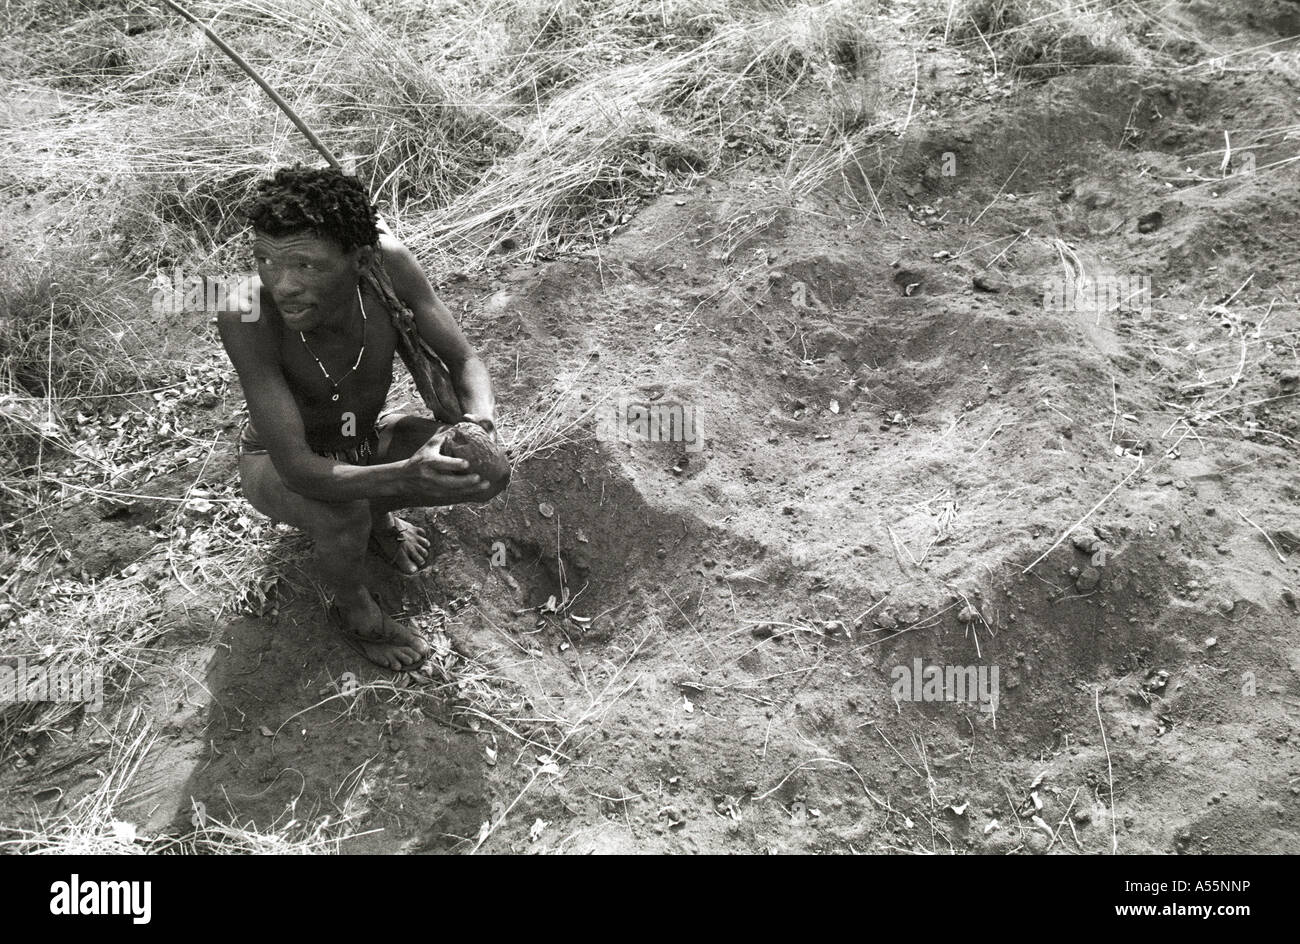 Bushman hunting San People Traditional life 21 century Stock Photo